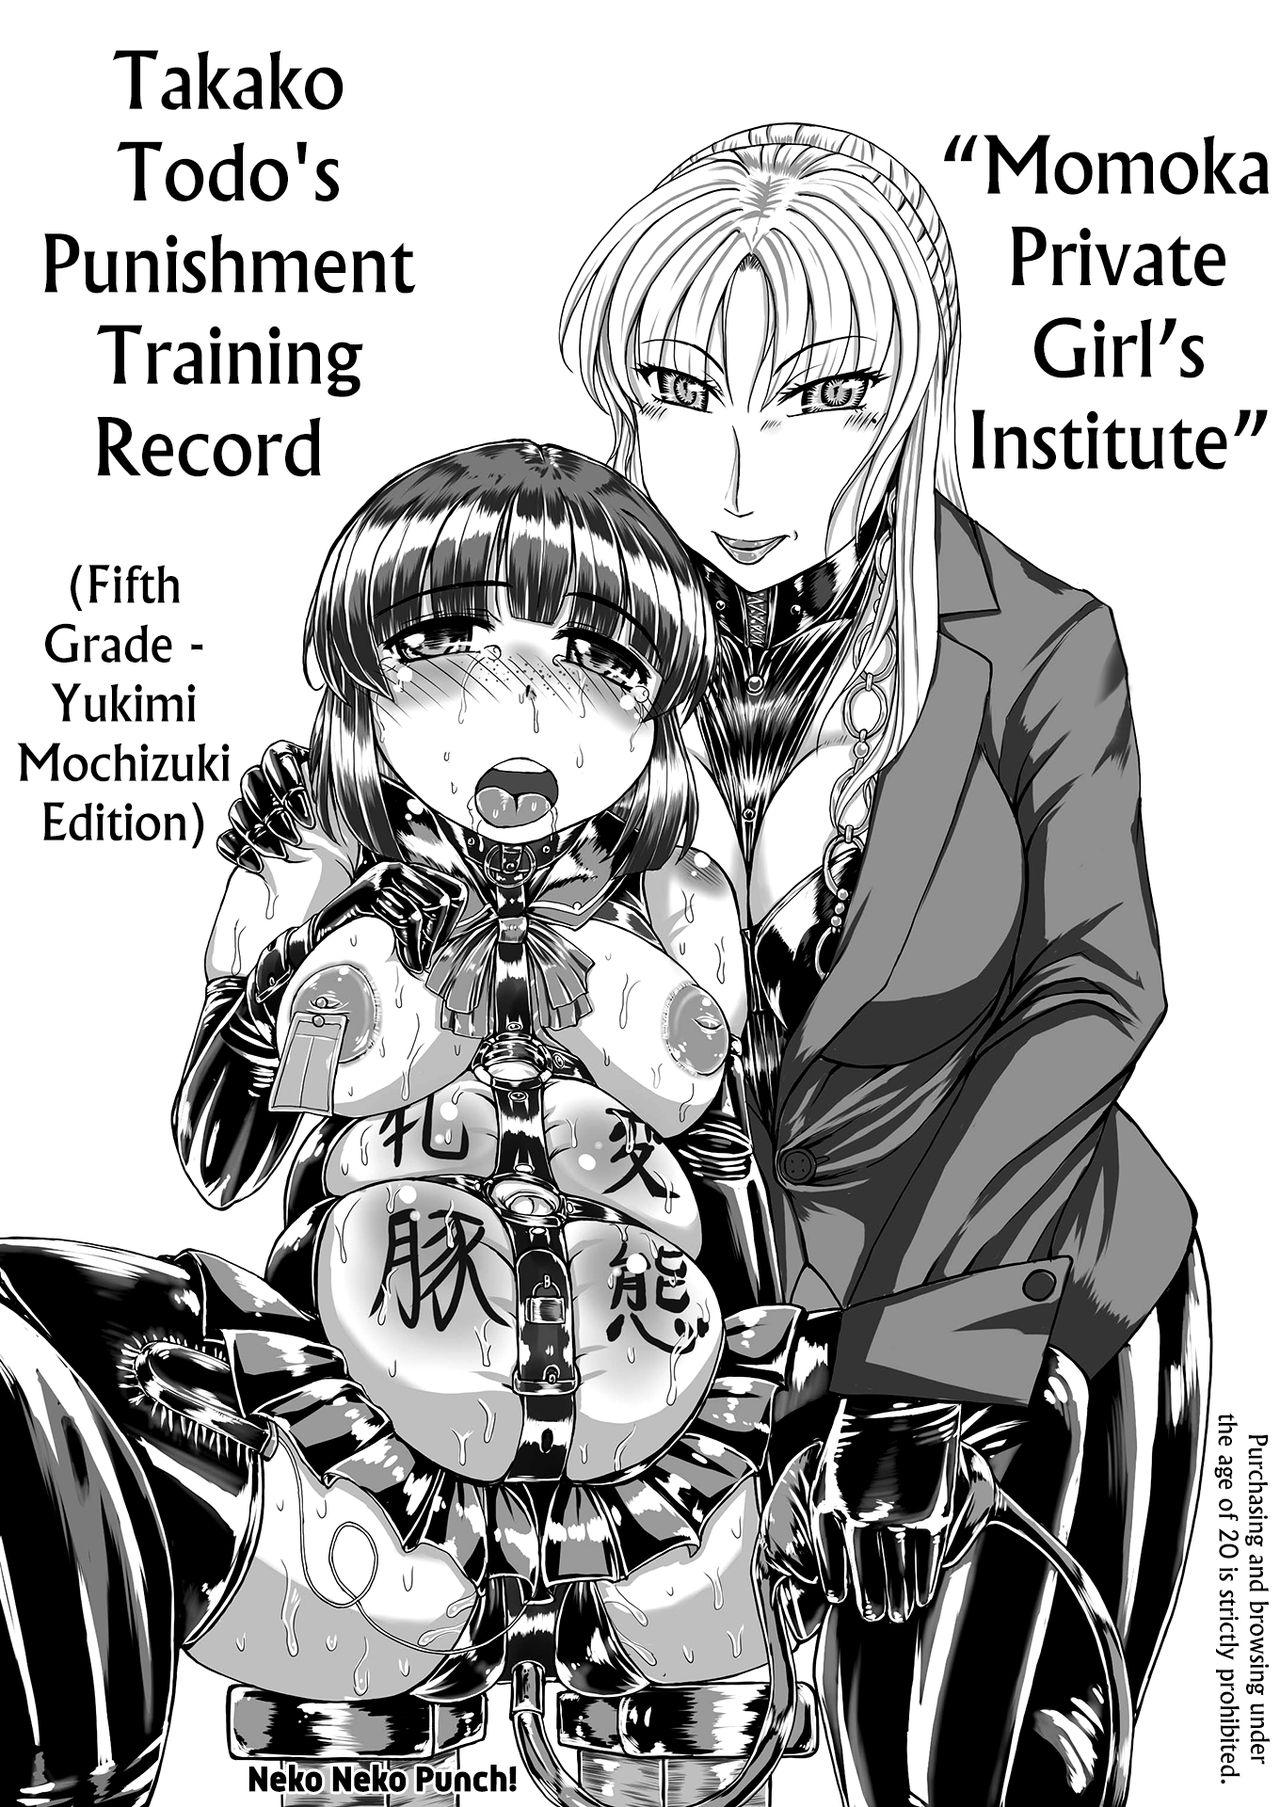 [Neko Neko Panchu!] [Momoka Private Girls Institute] [Takako Todo's Punishment Training Record] (Fifth Grade - Yukimi Mochizuki Edition) [English] 1